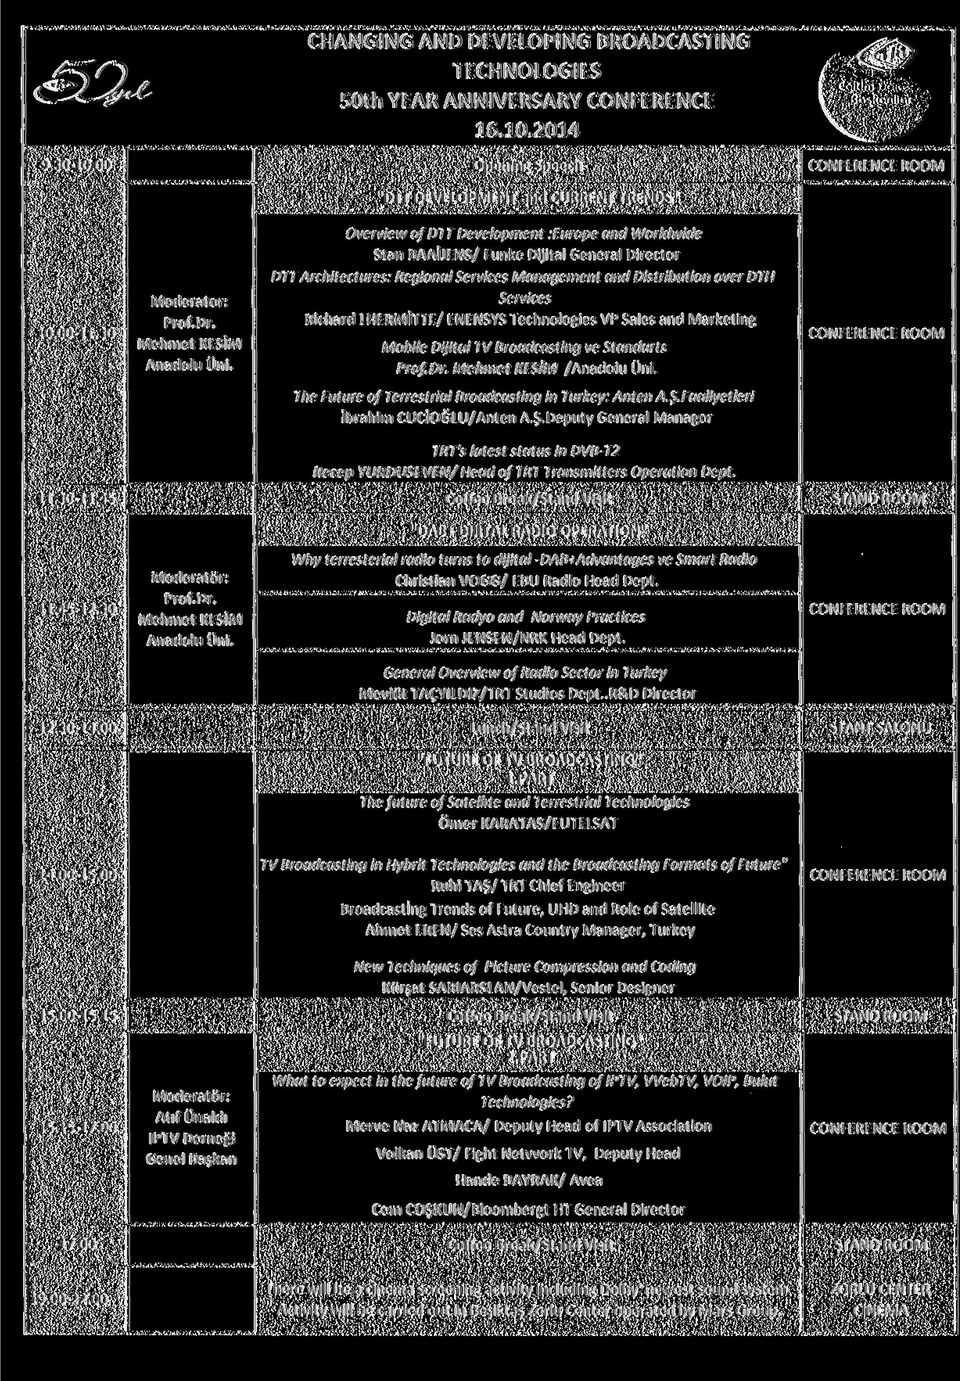 Distribution över DTH Services Richard LHERMİTTE/ ENENSYS Technologies VP Sales and Marketing Mobile Dijital TV Broadcasting ve Standarts / The Future of Terrestrial Broadcasting in Turkey: Anten A.Ş.